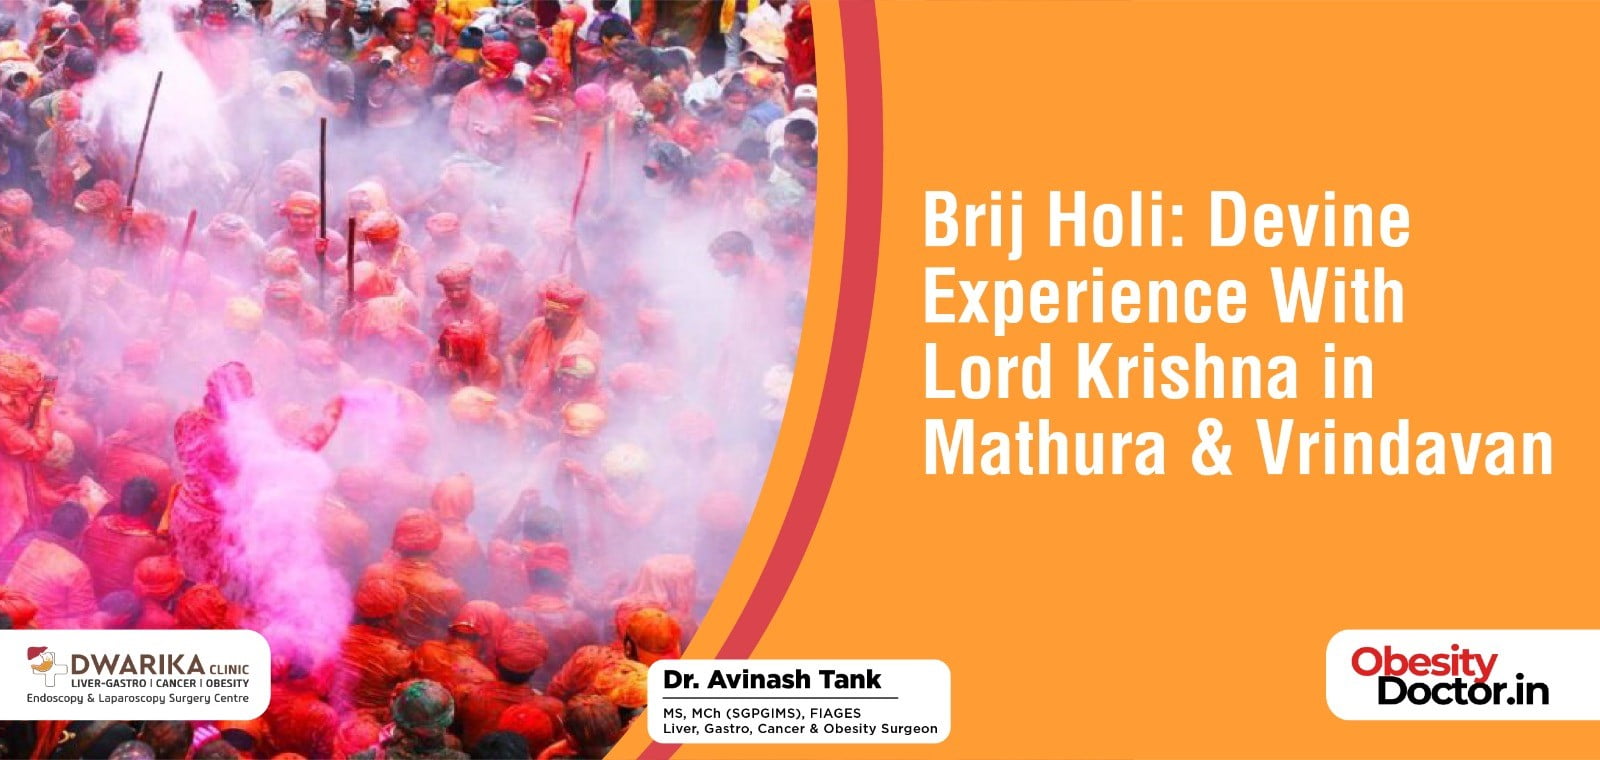 Brij Holi: Devine experience with Lord Krishna in Mathura & Vrindavan